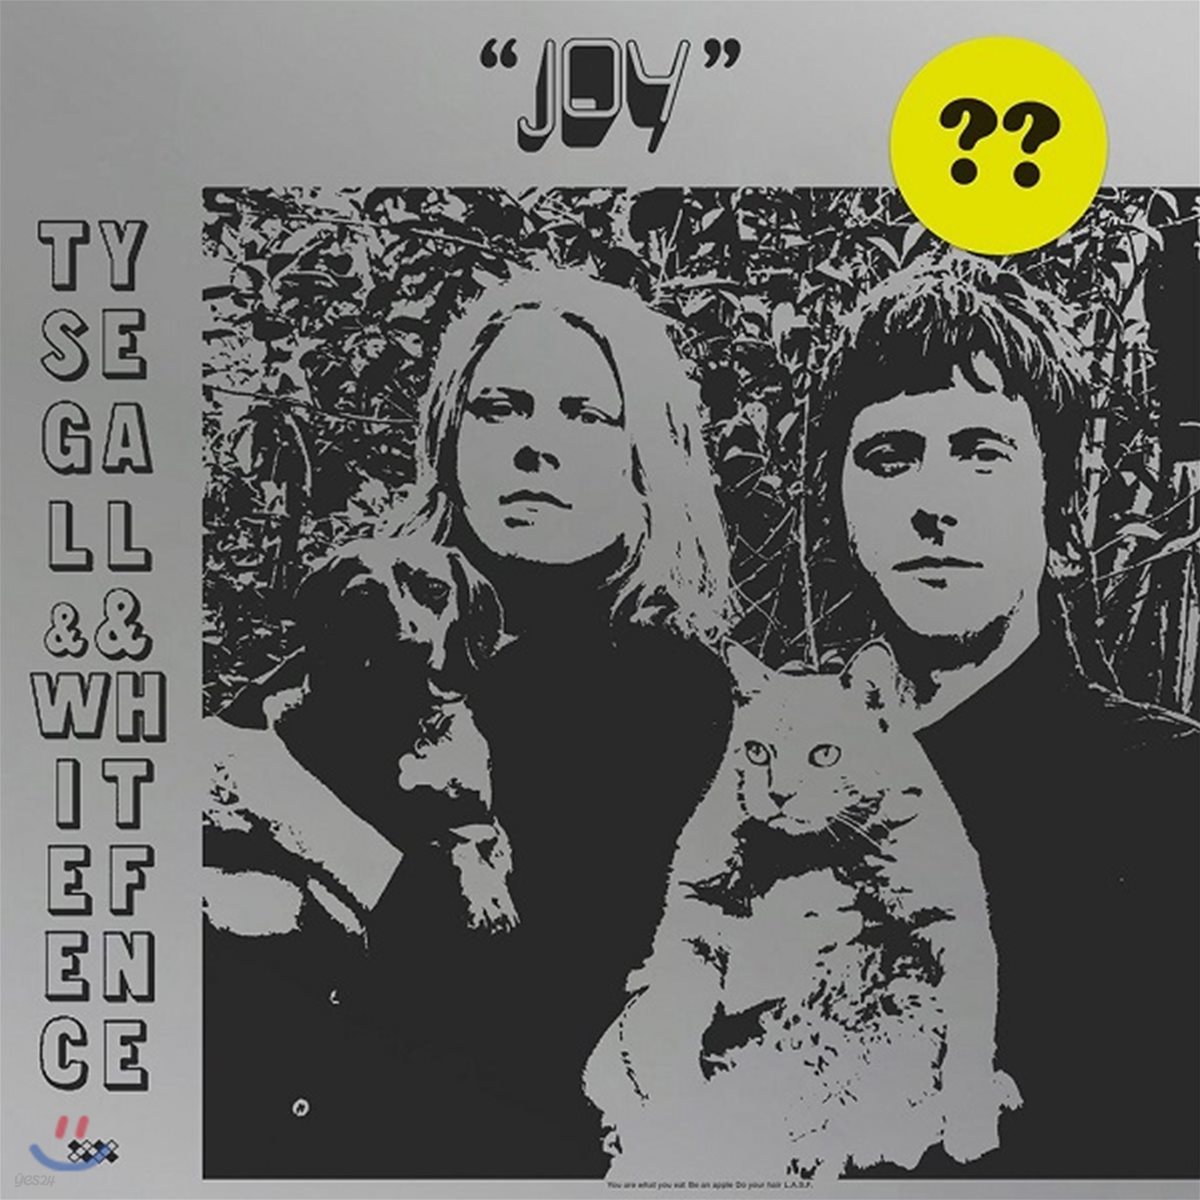 Ty Segall &amp; White Fence (타이 시걸, 화이트 펜스) - Joy